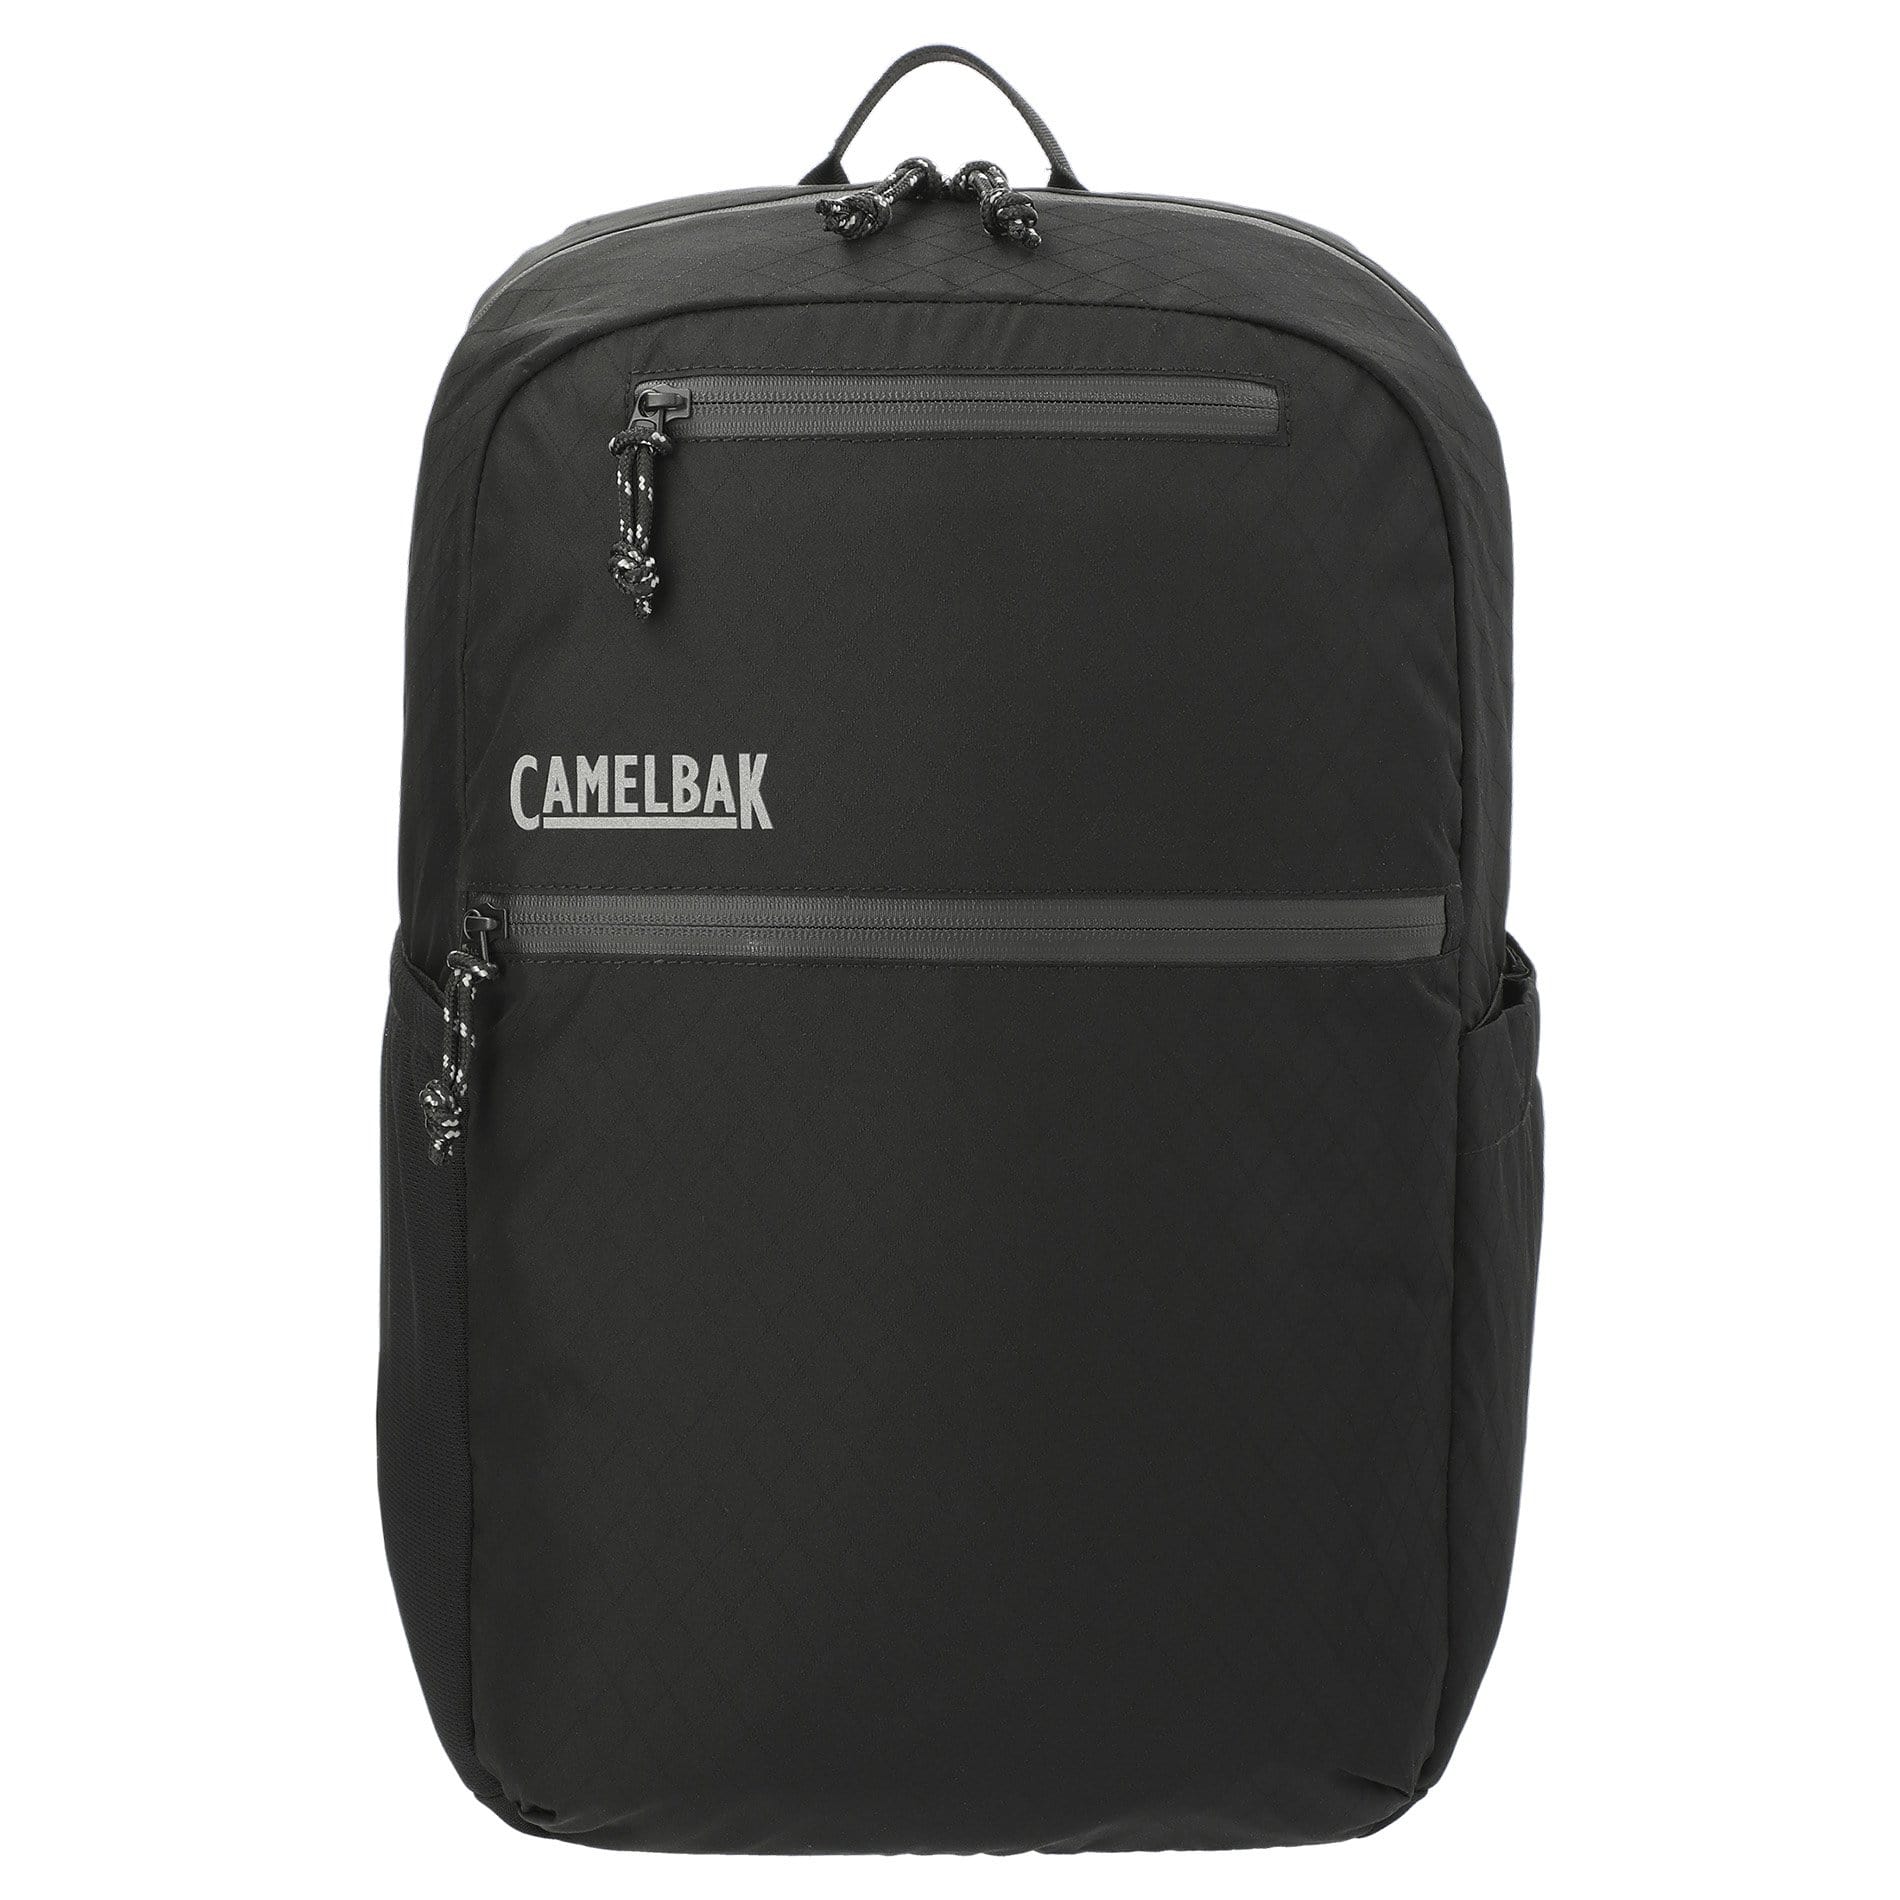 CamelBak Bags One Size / Black CamelBak - LAX 15" Computer Backpack